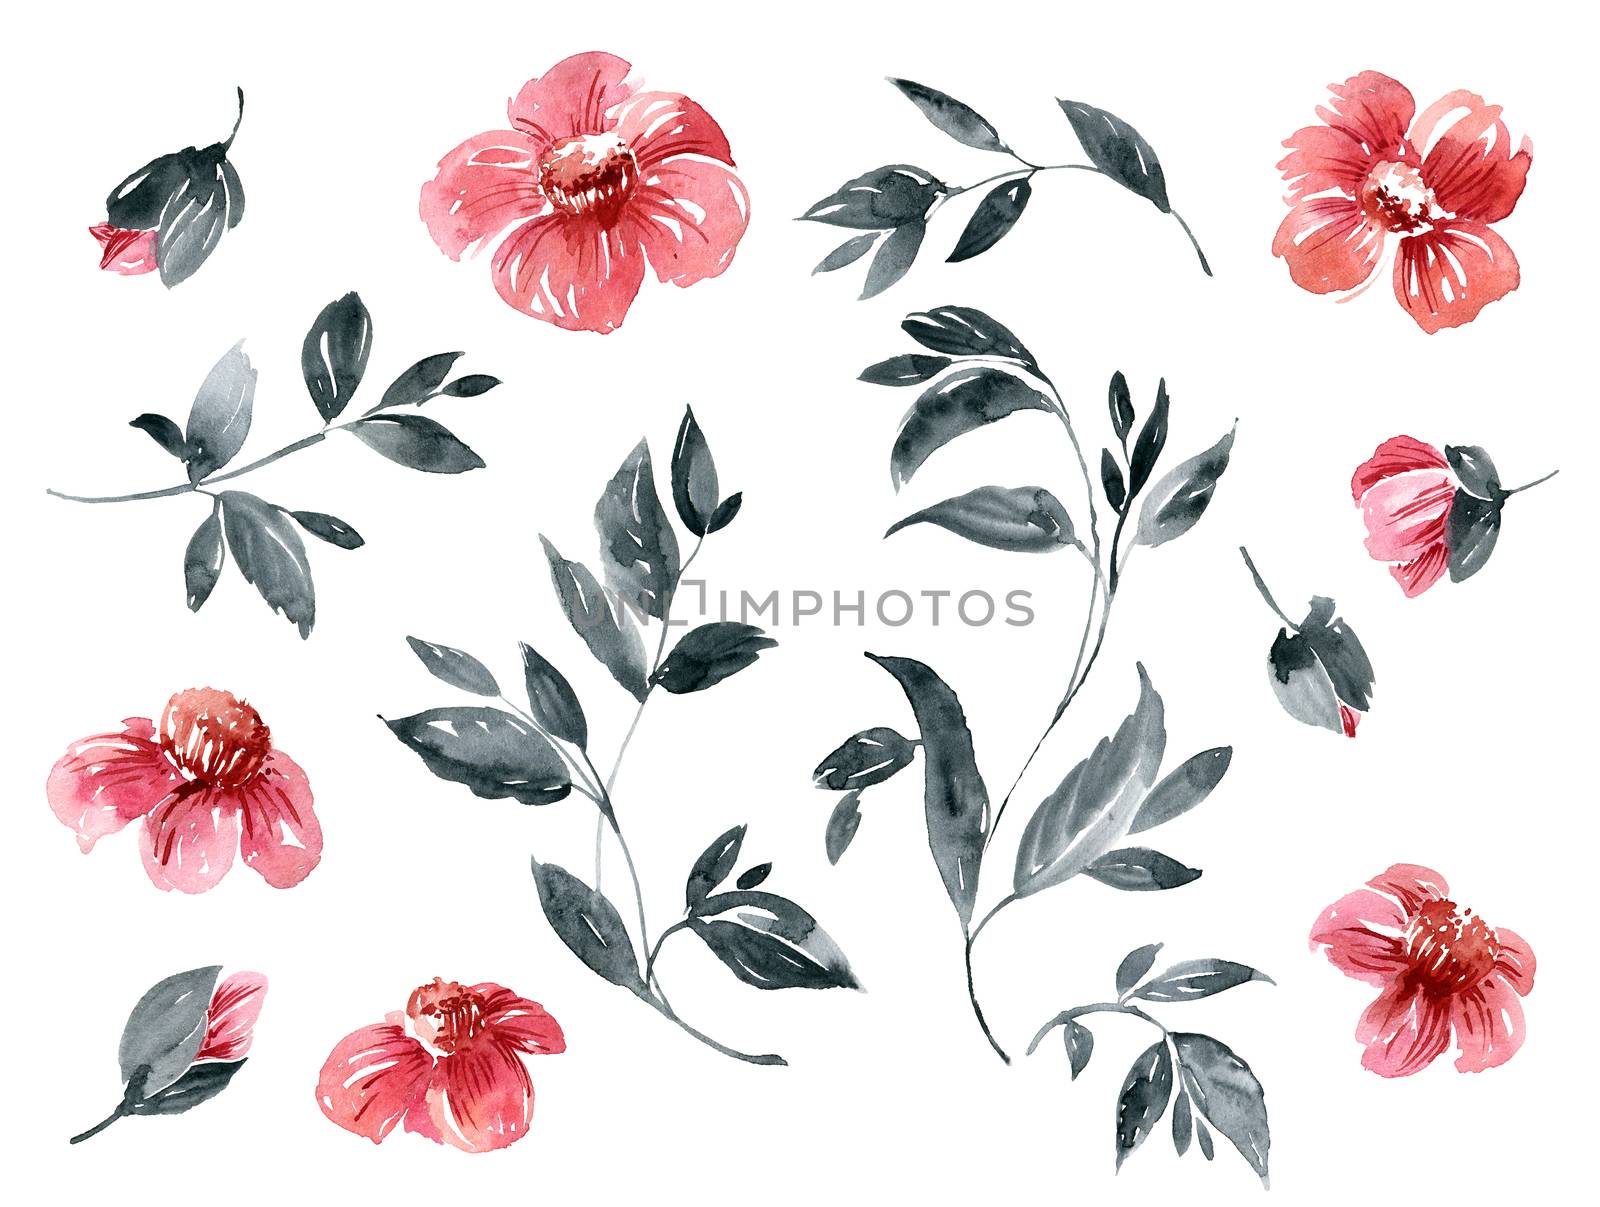 Watercolor flowers and leaves set by Olatarakanova